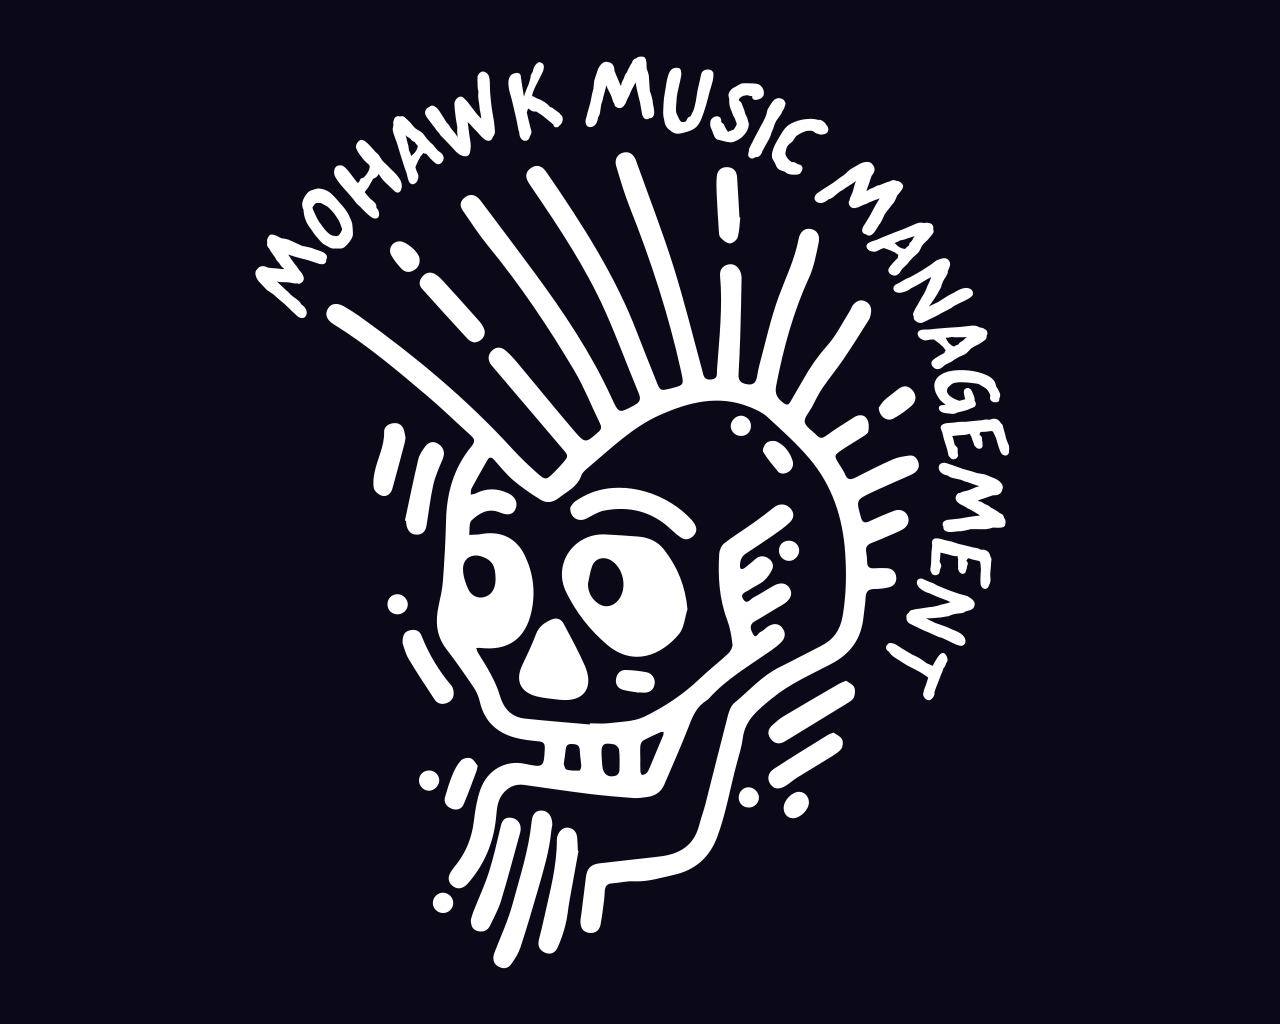 Mohawk Music Management